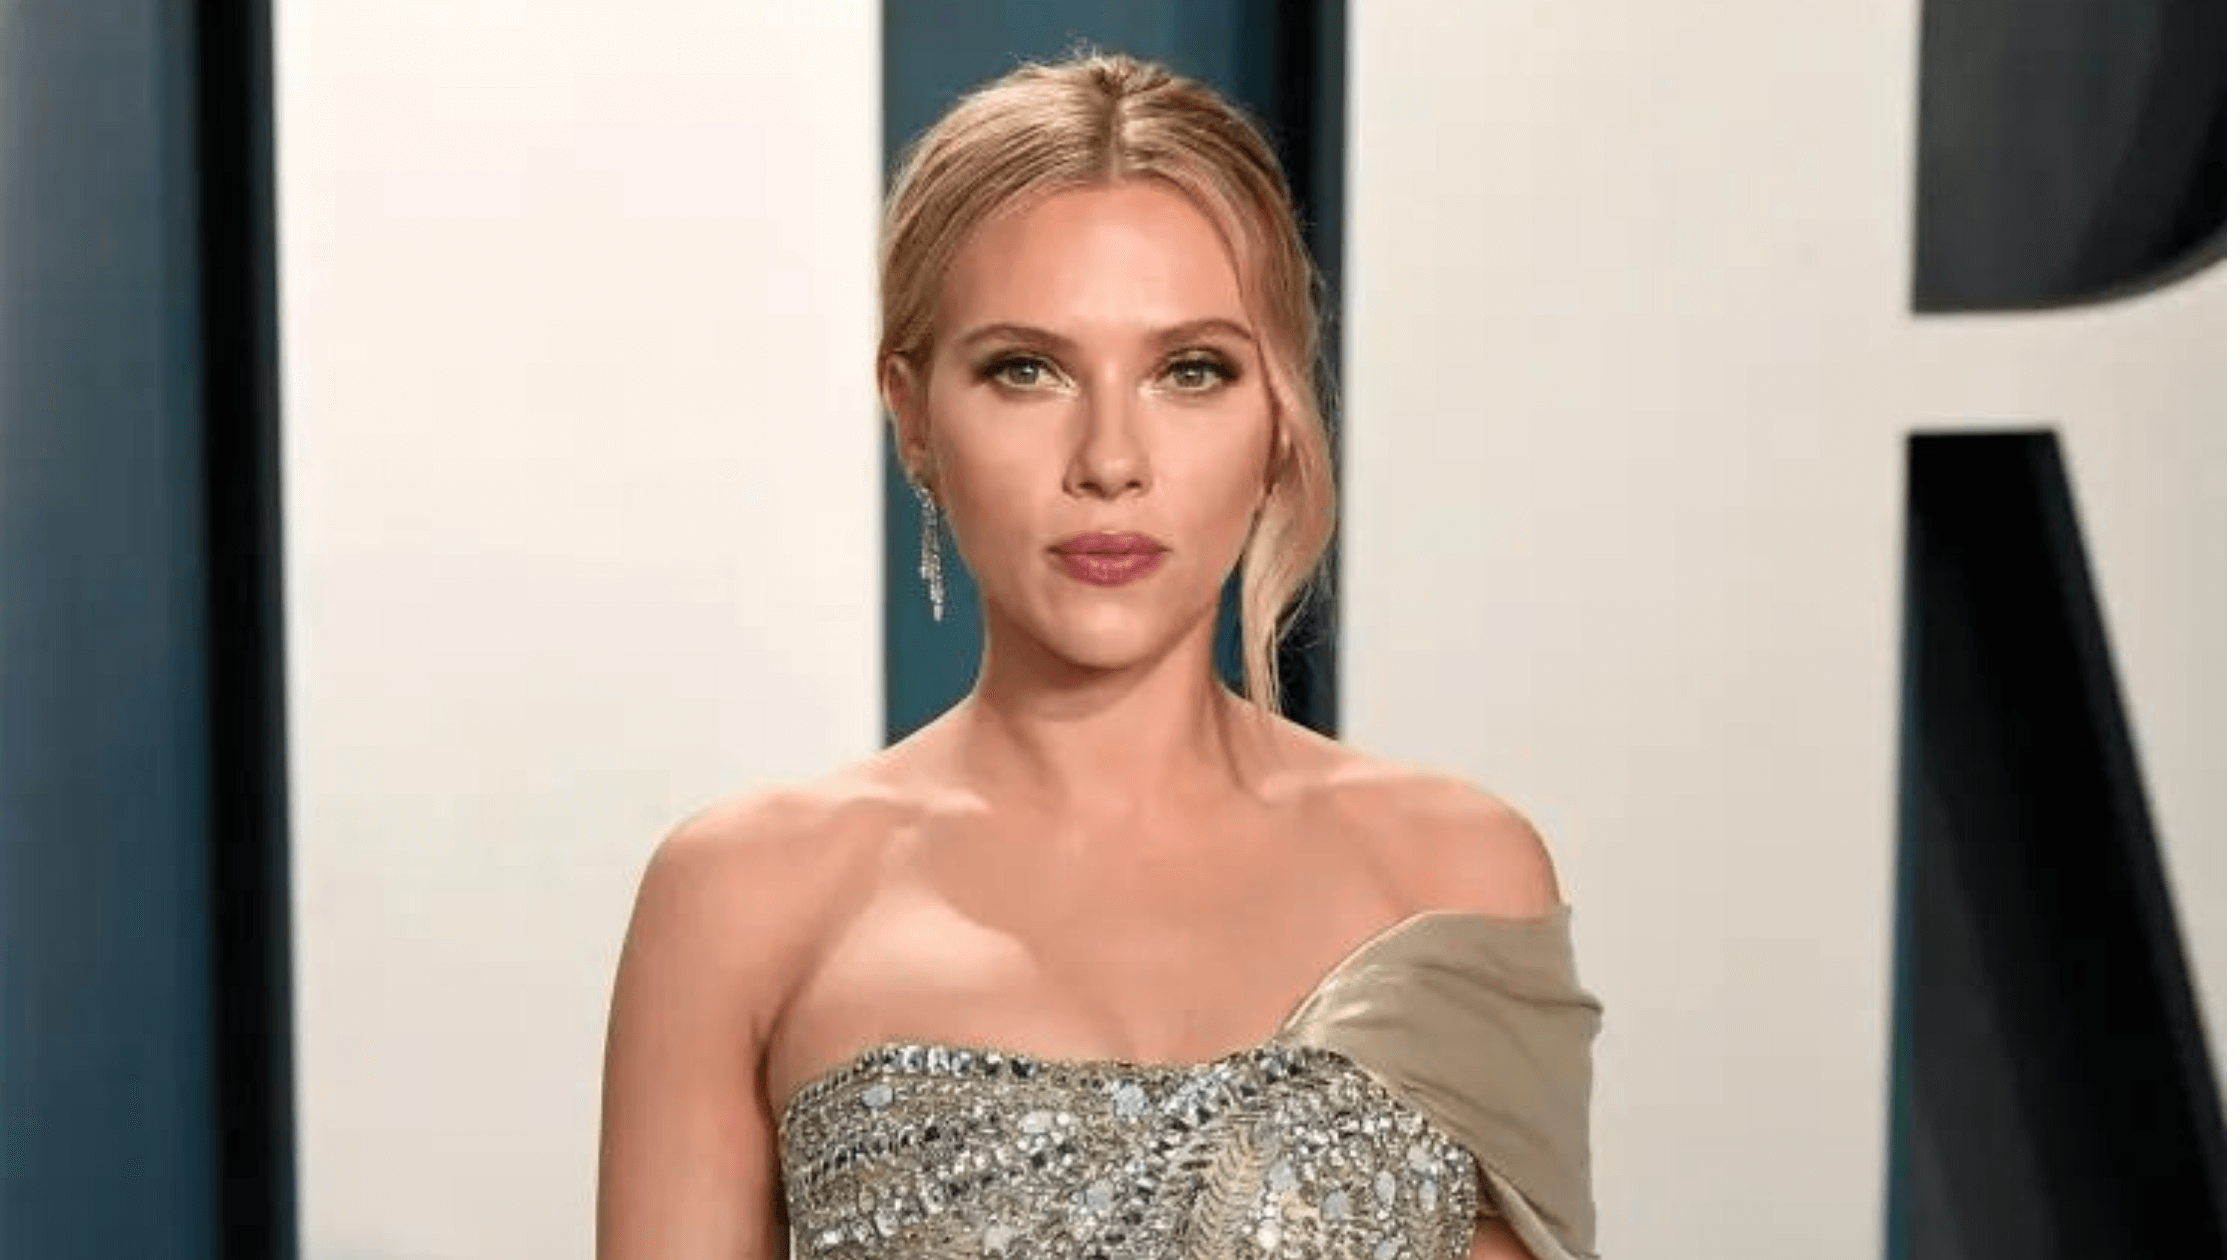 Does Scarlett Johansson Have Tattoos Scarlett Johansson's Net Worth, Height, Age, Husband, Movies, Kids